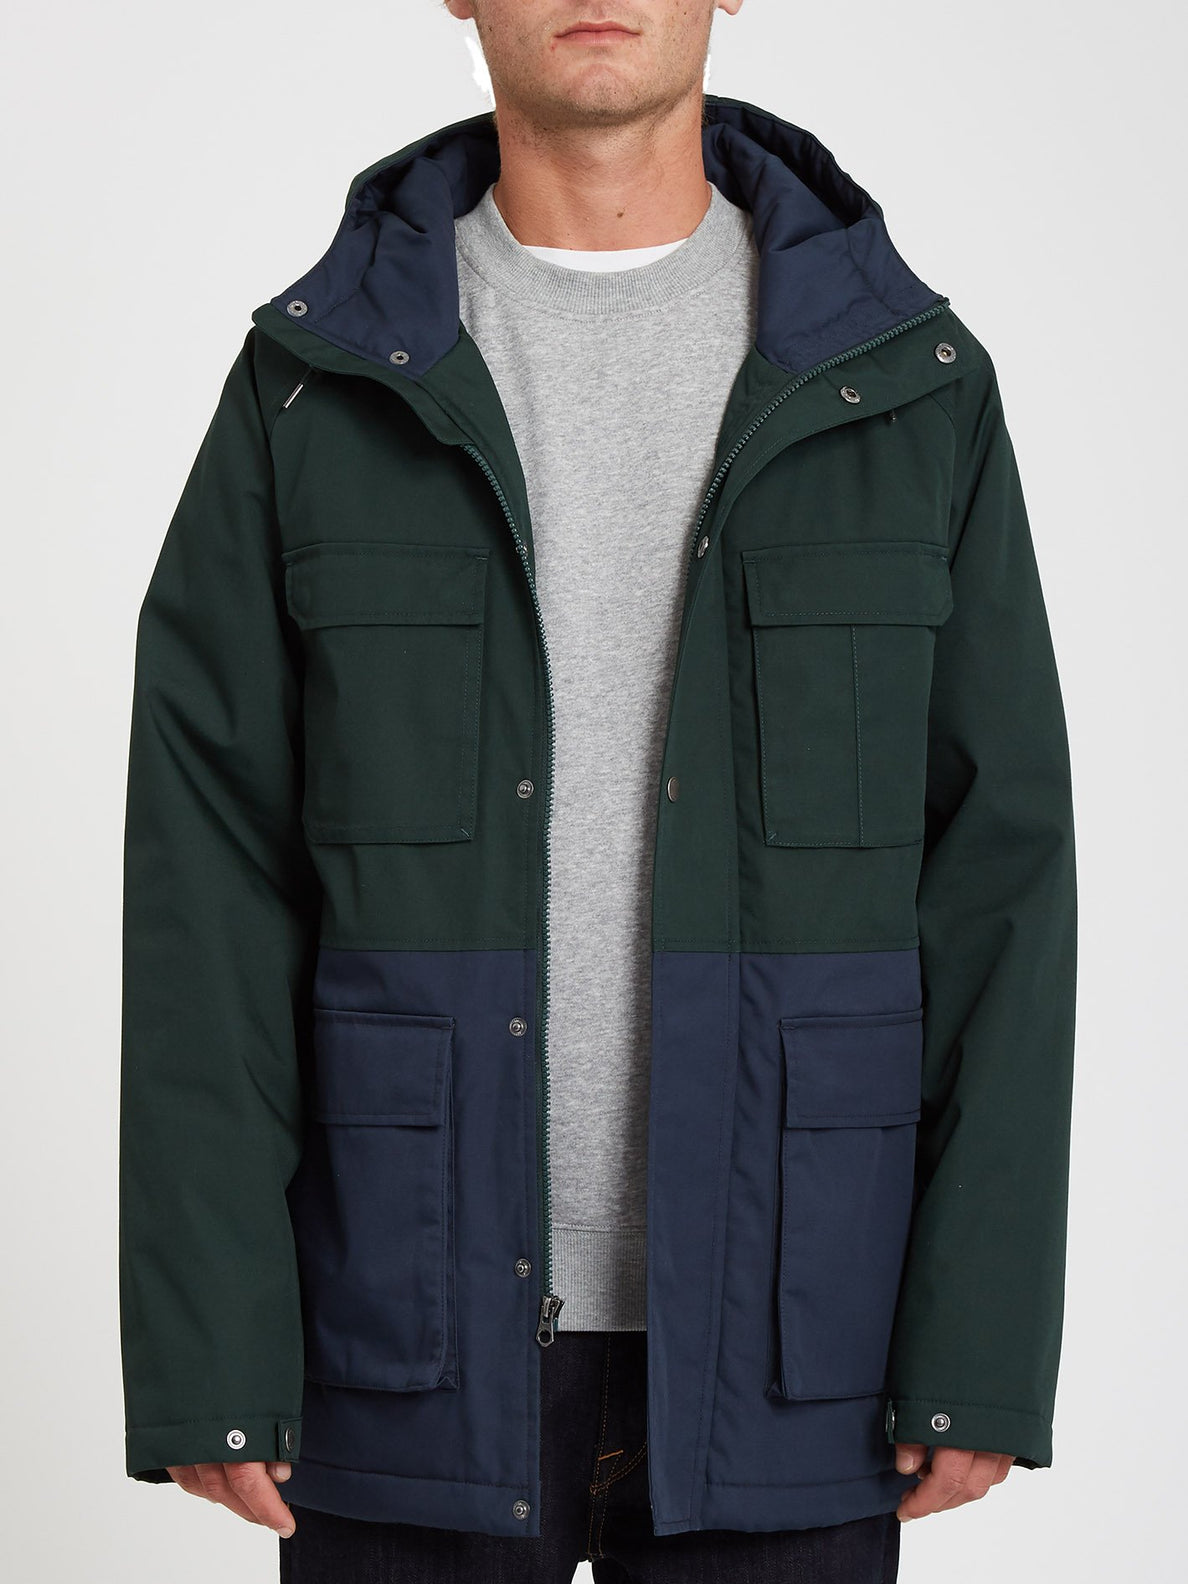 Renton Winter 5K Jacket - STONE CULTURE BLUE (A1732014_SCB) [2]